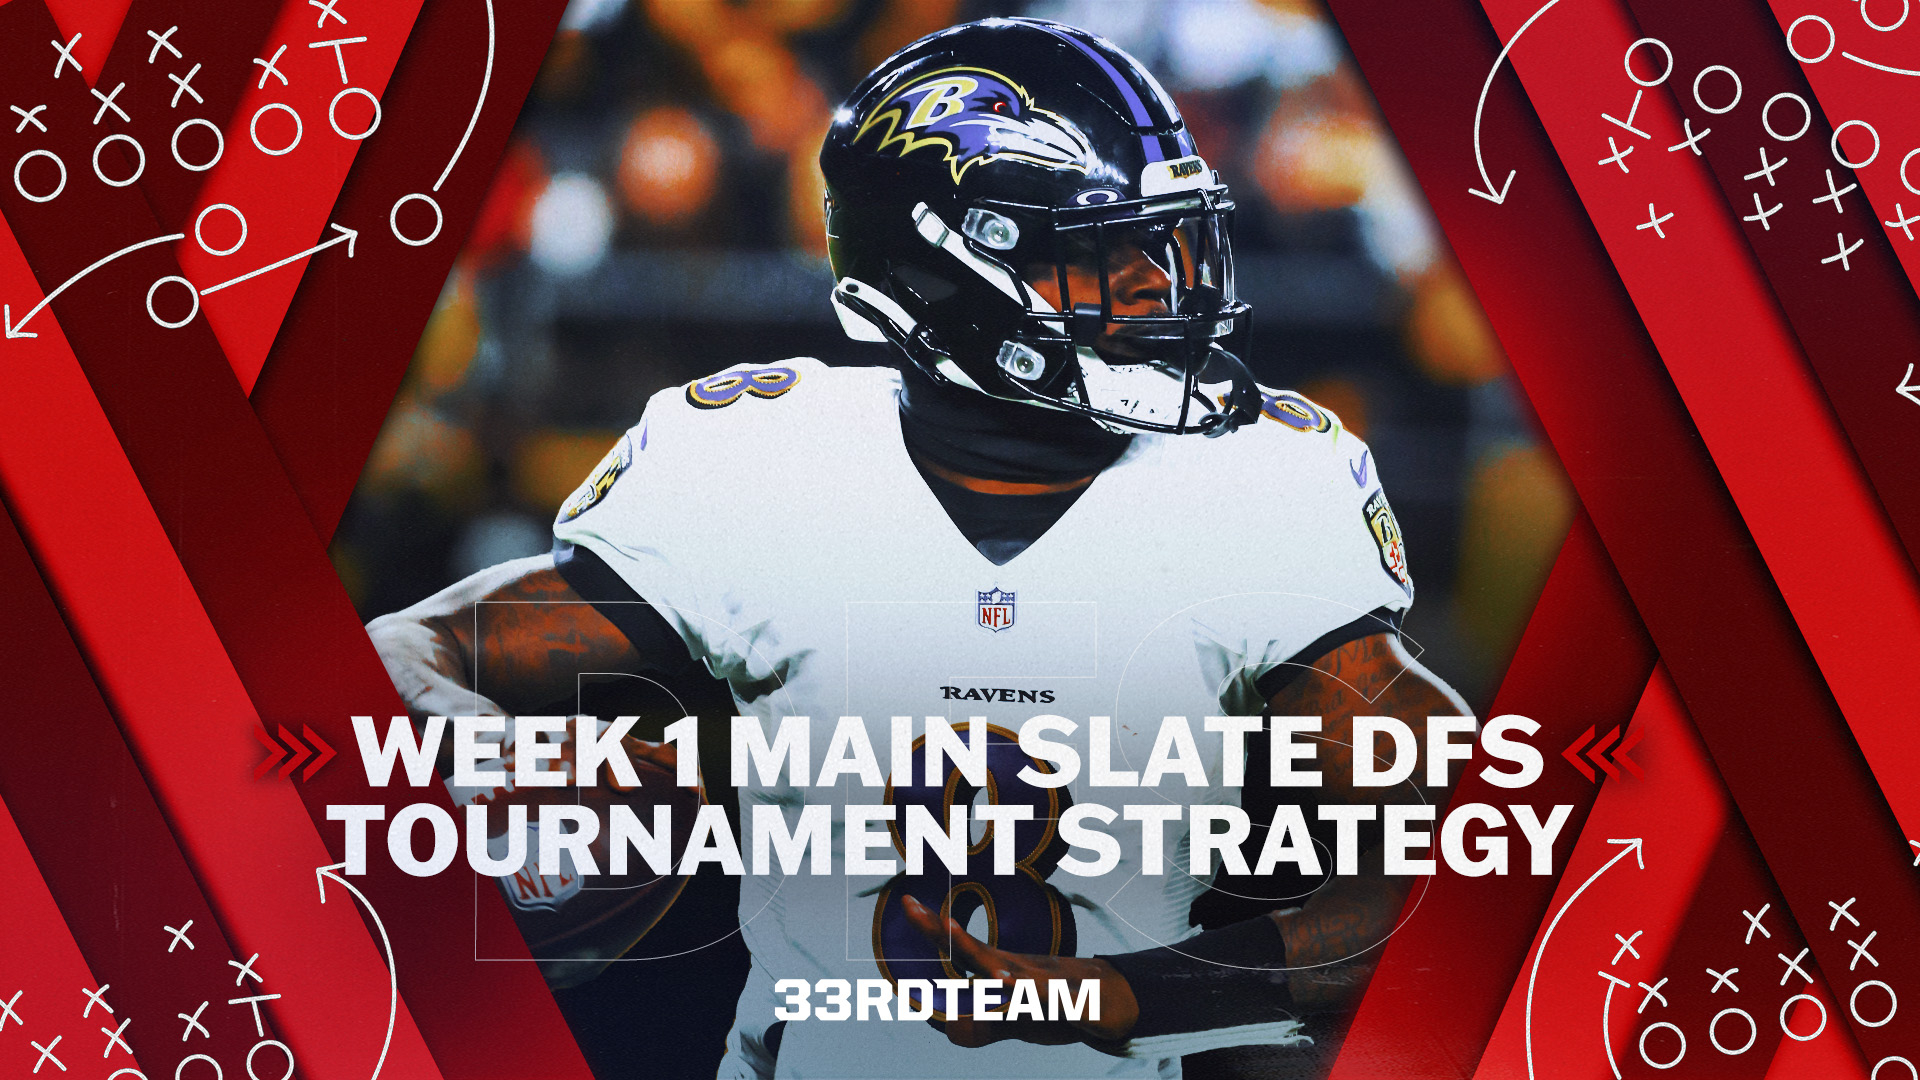 Week 1 Main Slate DFS Tournament Strategy